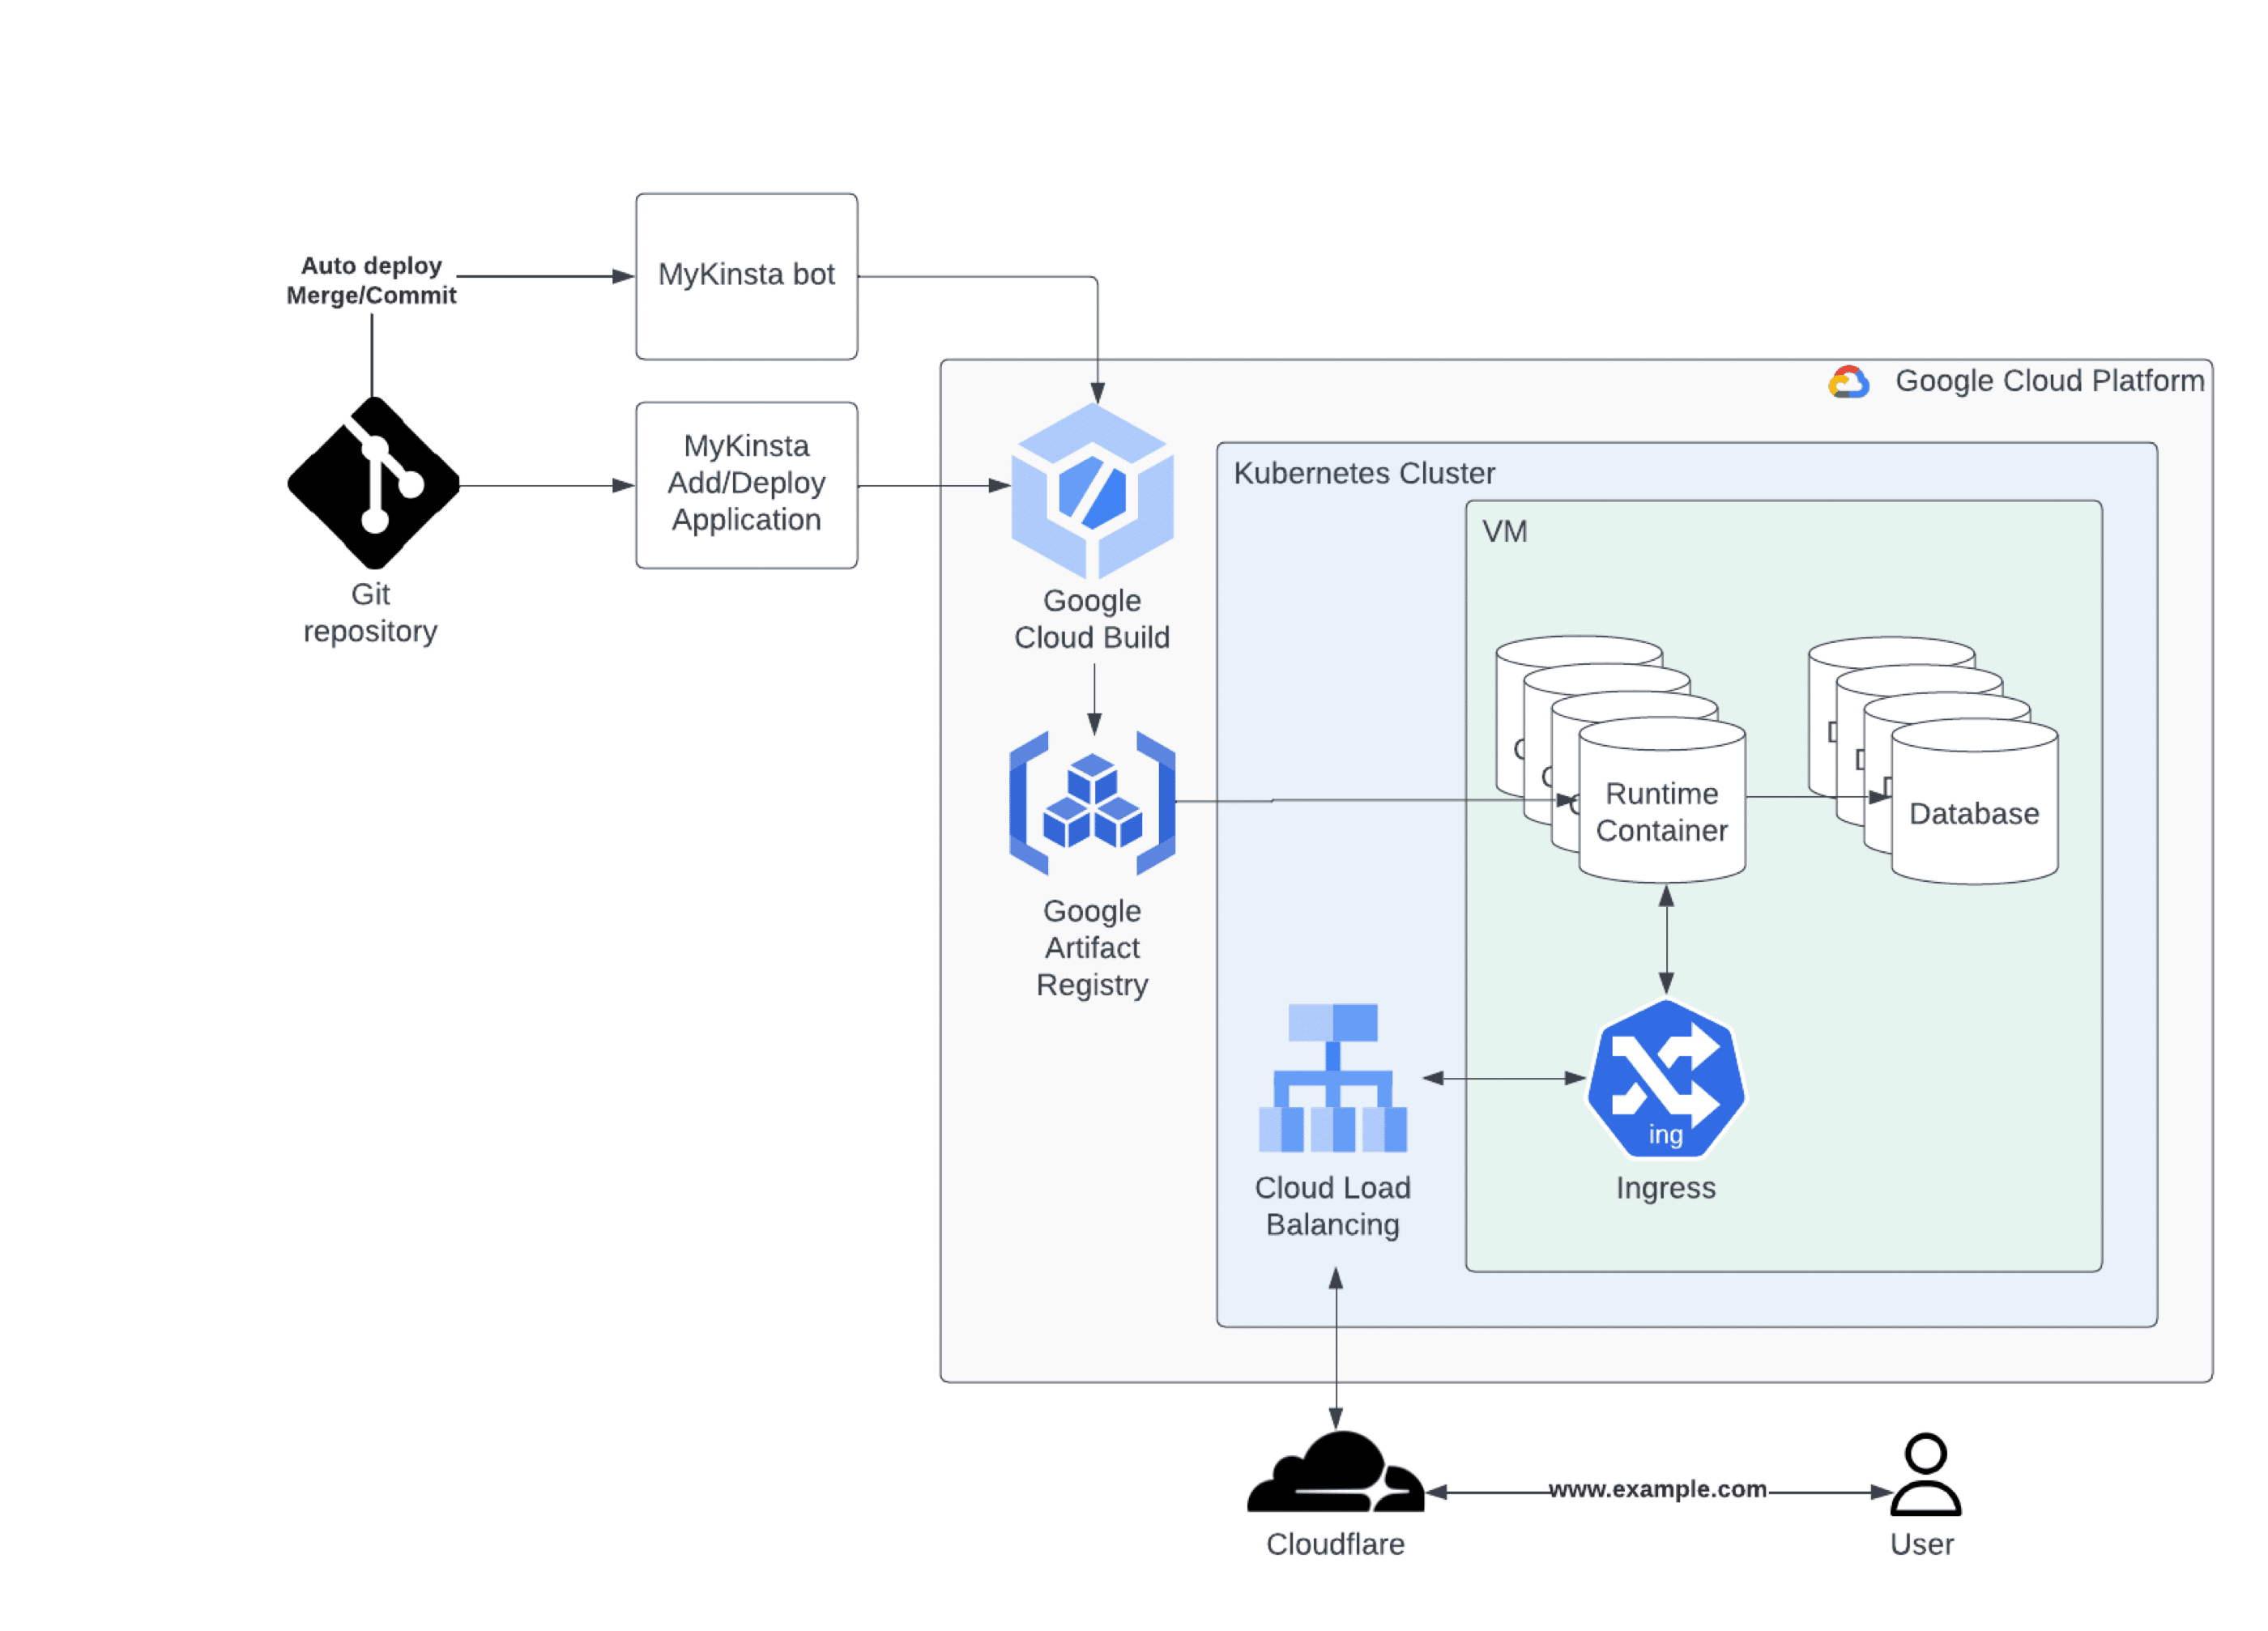 Et diagram over Kinsta's infrastruktur for applikationshosting og databasehosting.